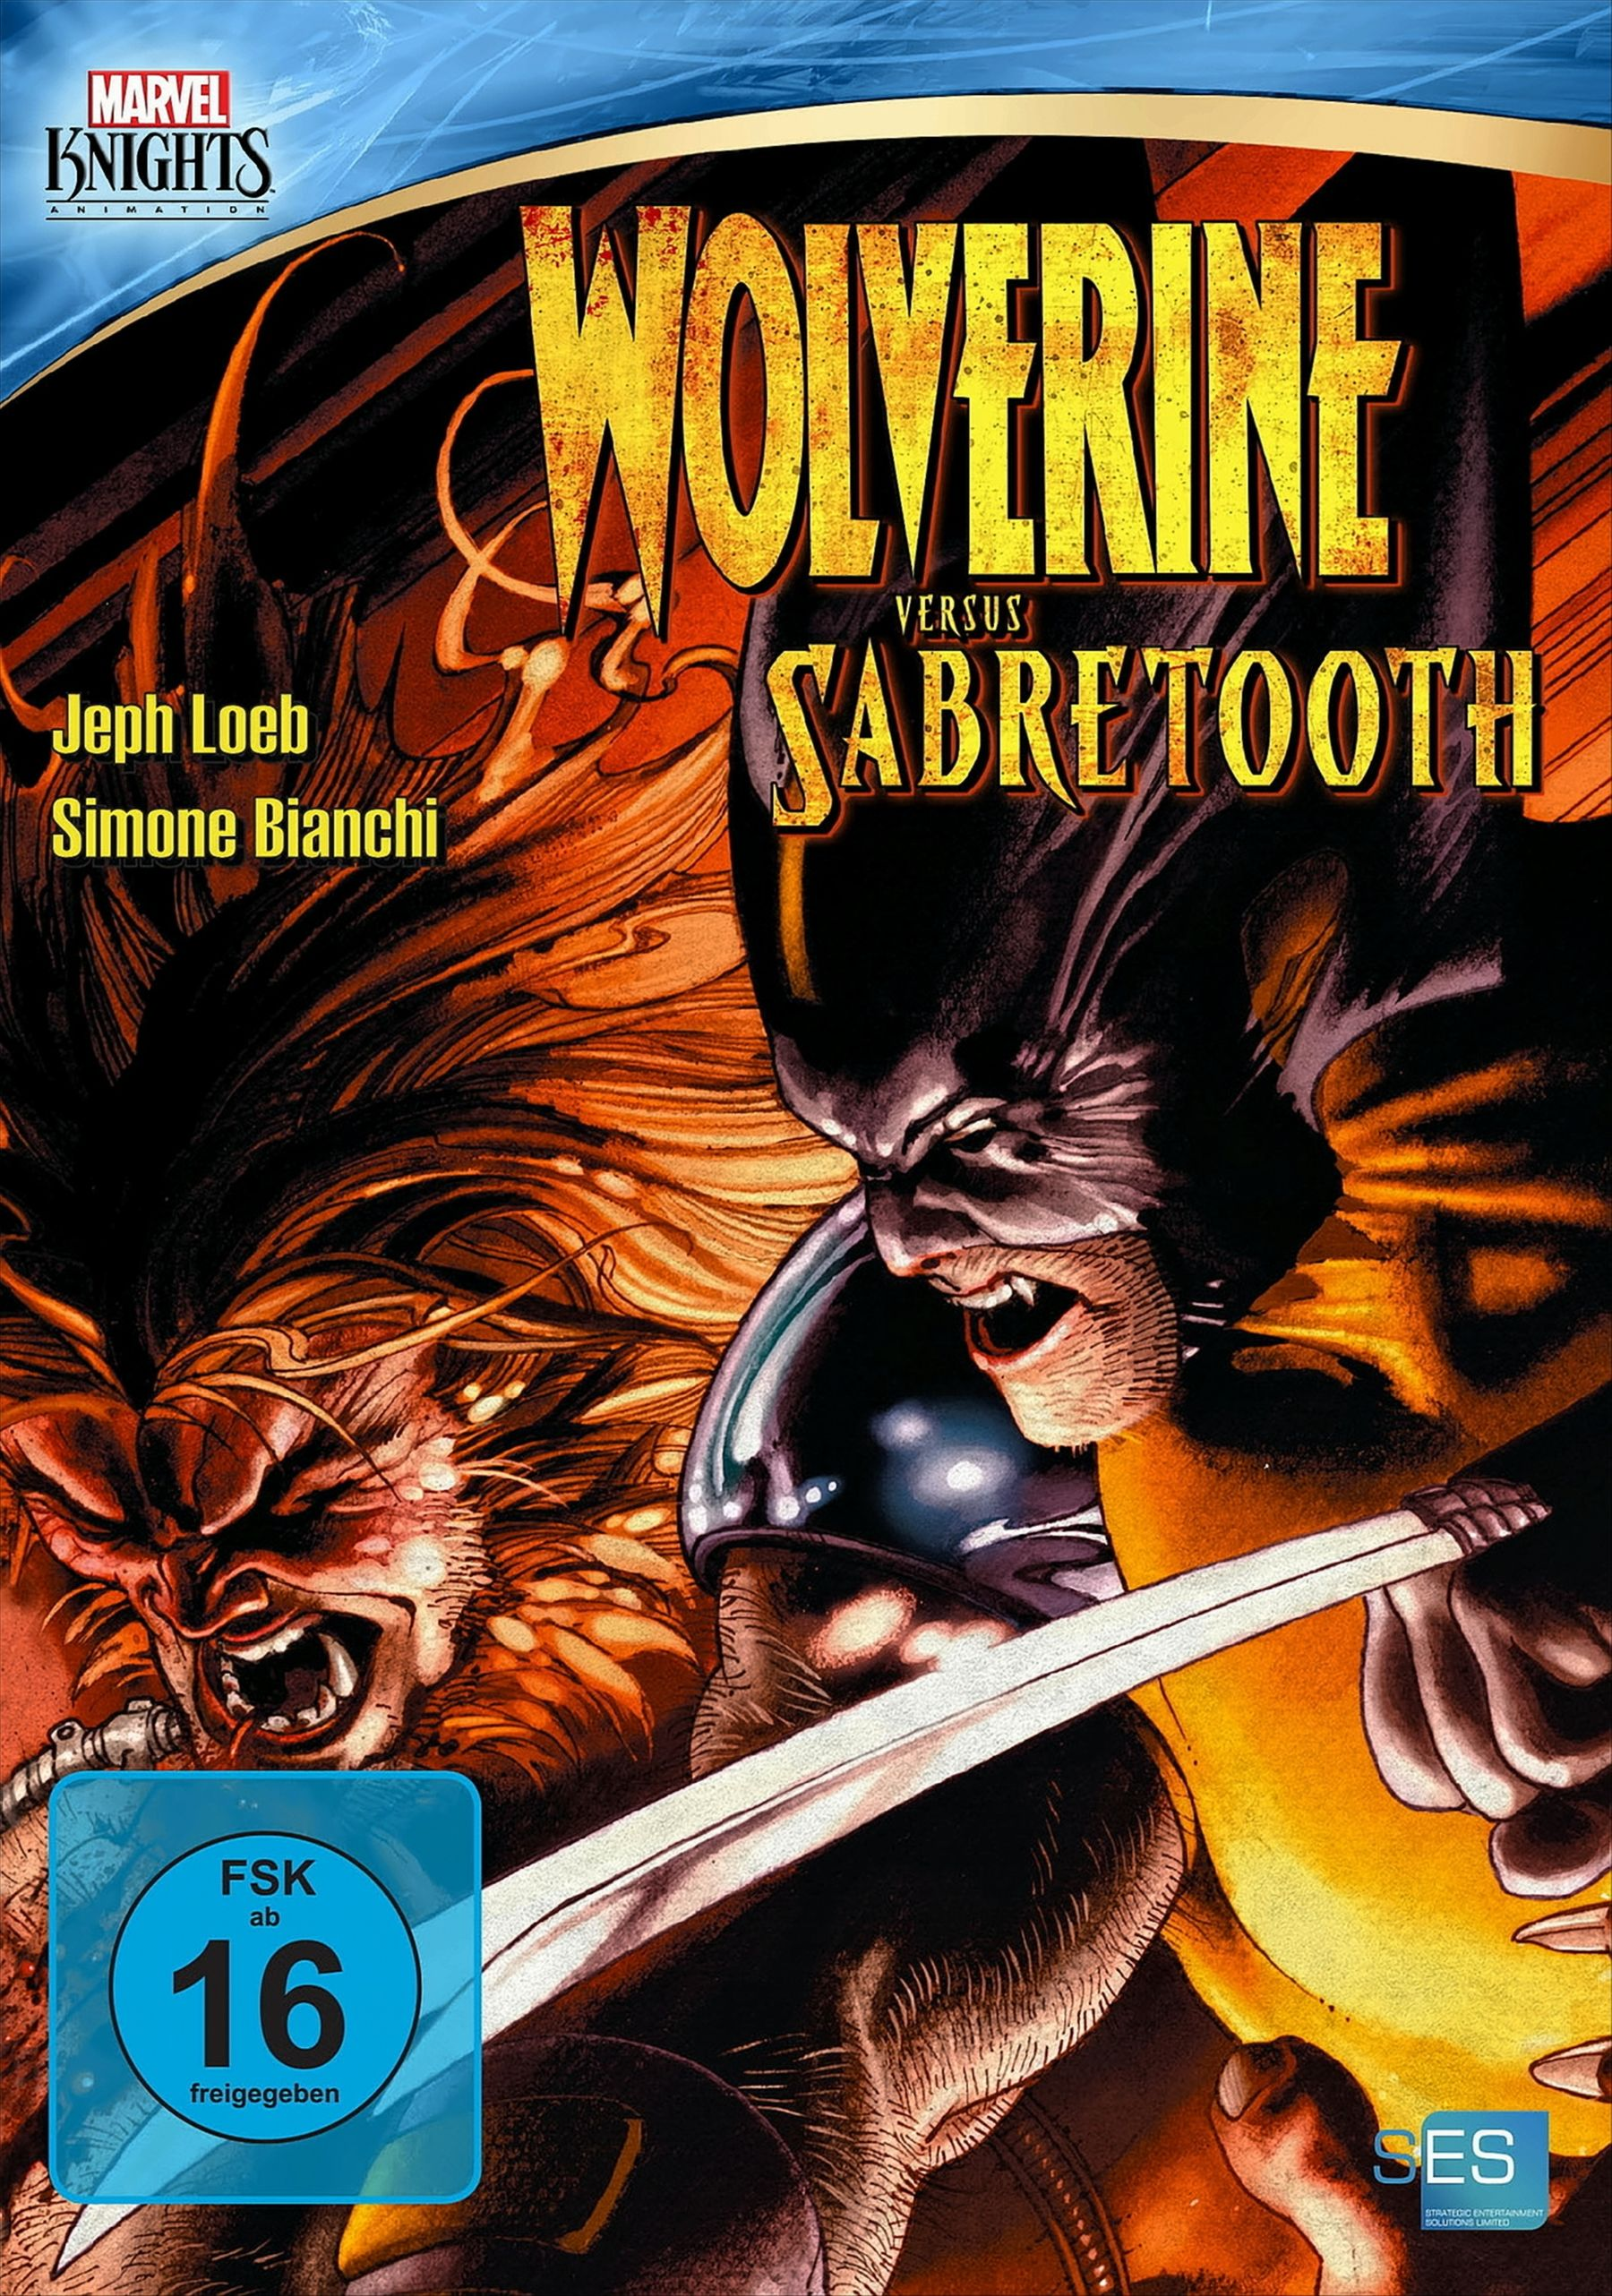 Marvel Knights - Wolverine Sabertooth (OmU) DVD versus